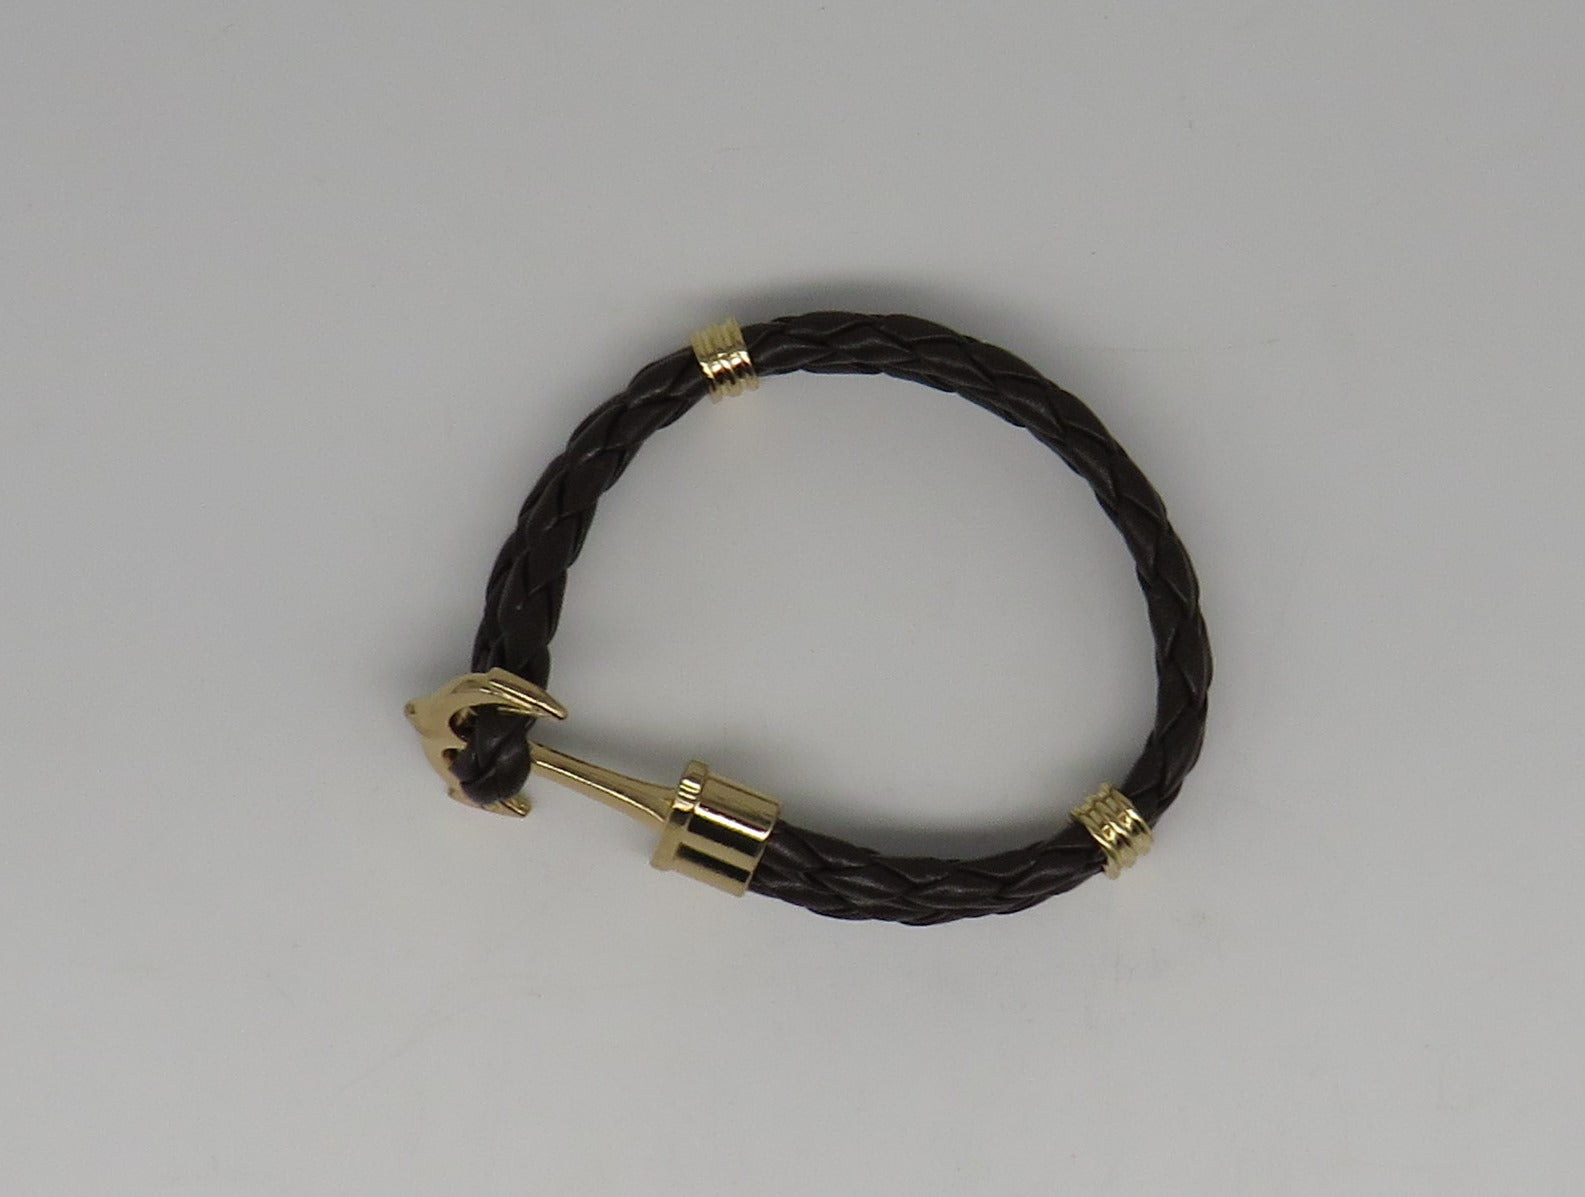 Unisex Leather Handmade Braided Cuff Anchor Bangle Bracelet Wristband Dark Coffee-Gold